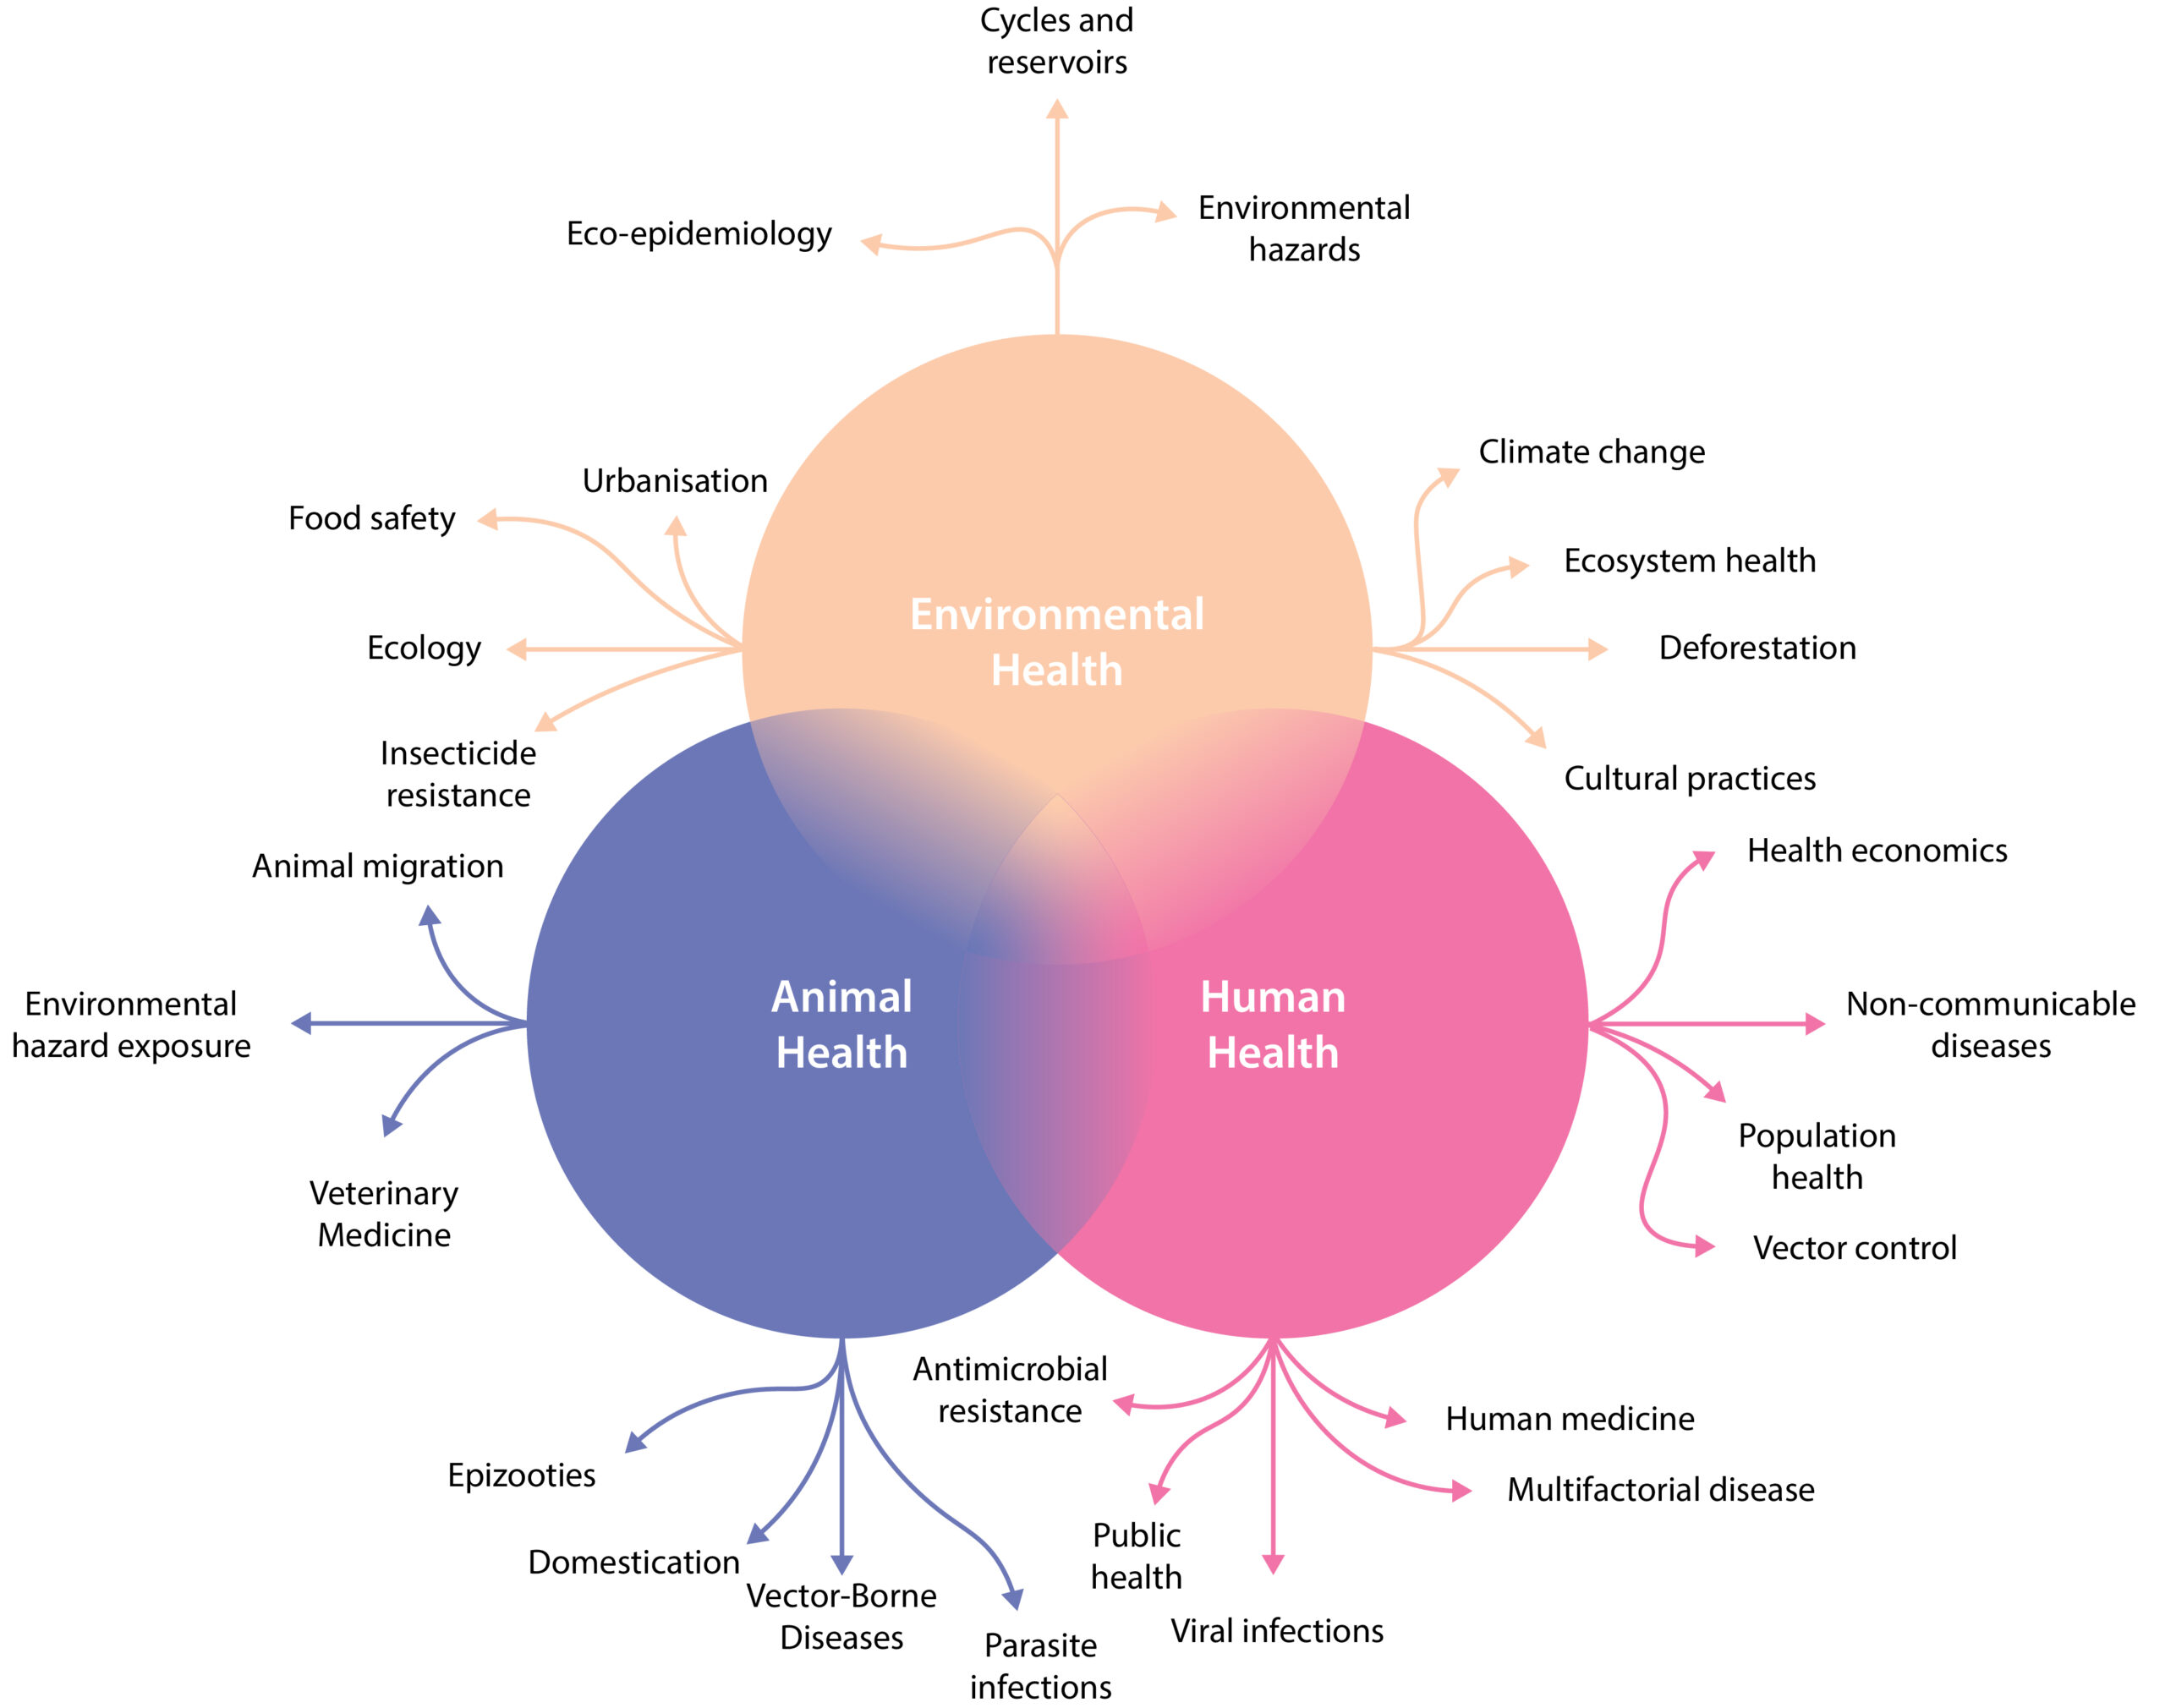 Figure 3. One Health scheme. Reproduced from Malliaraki, 20209